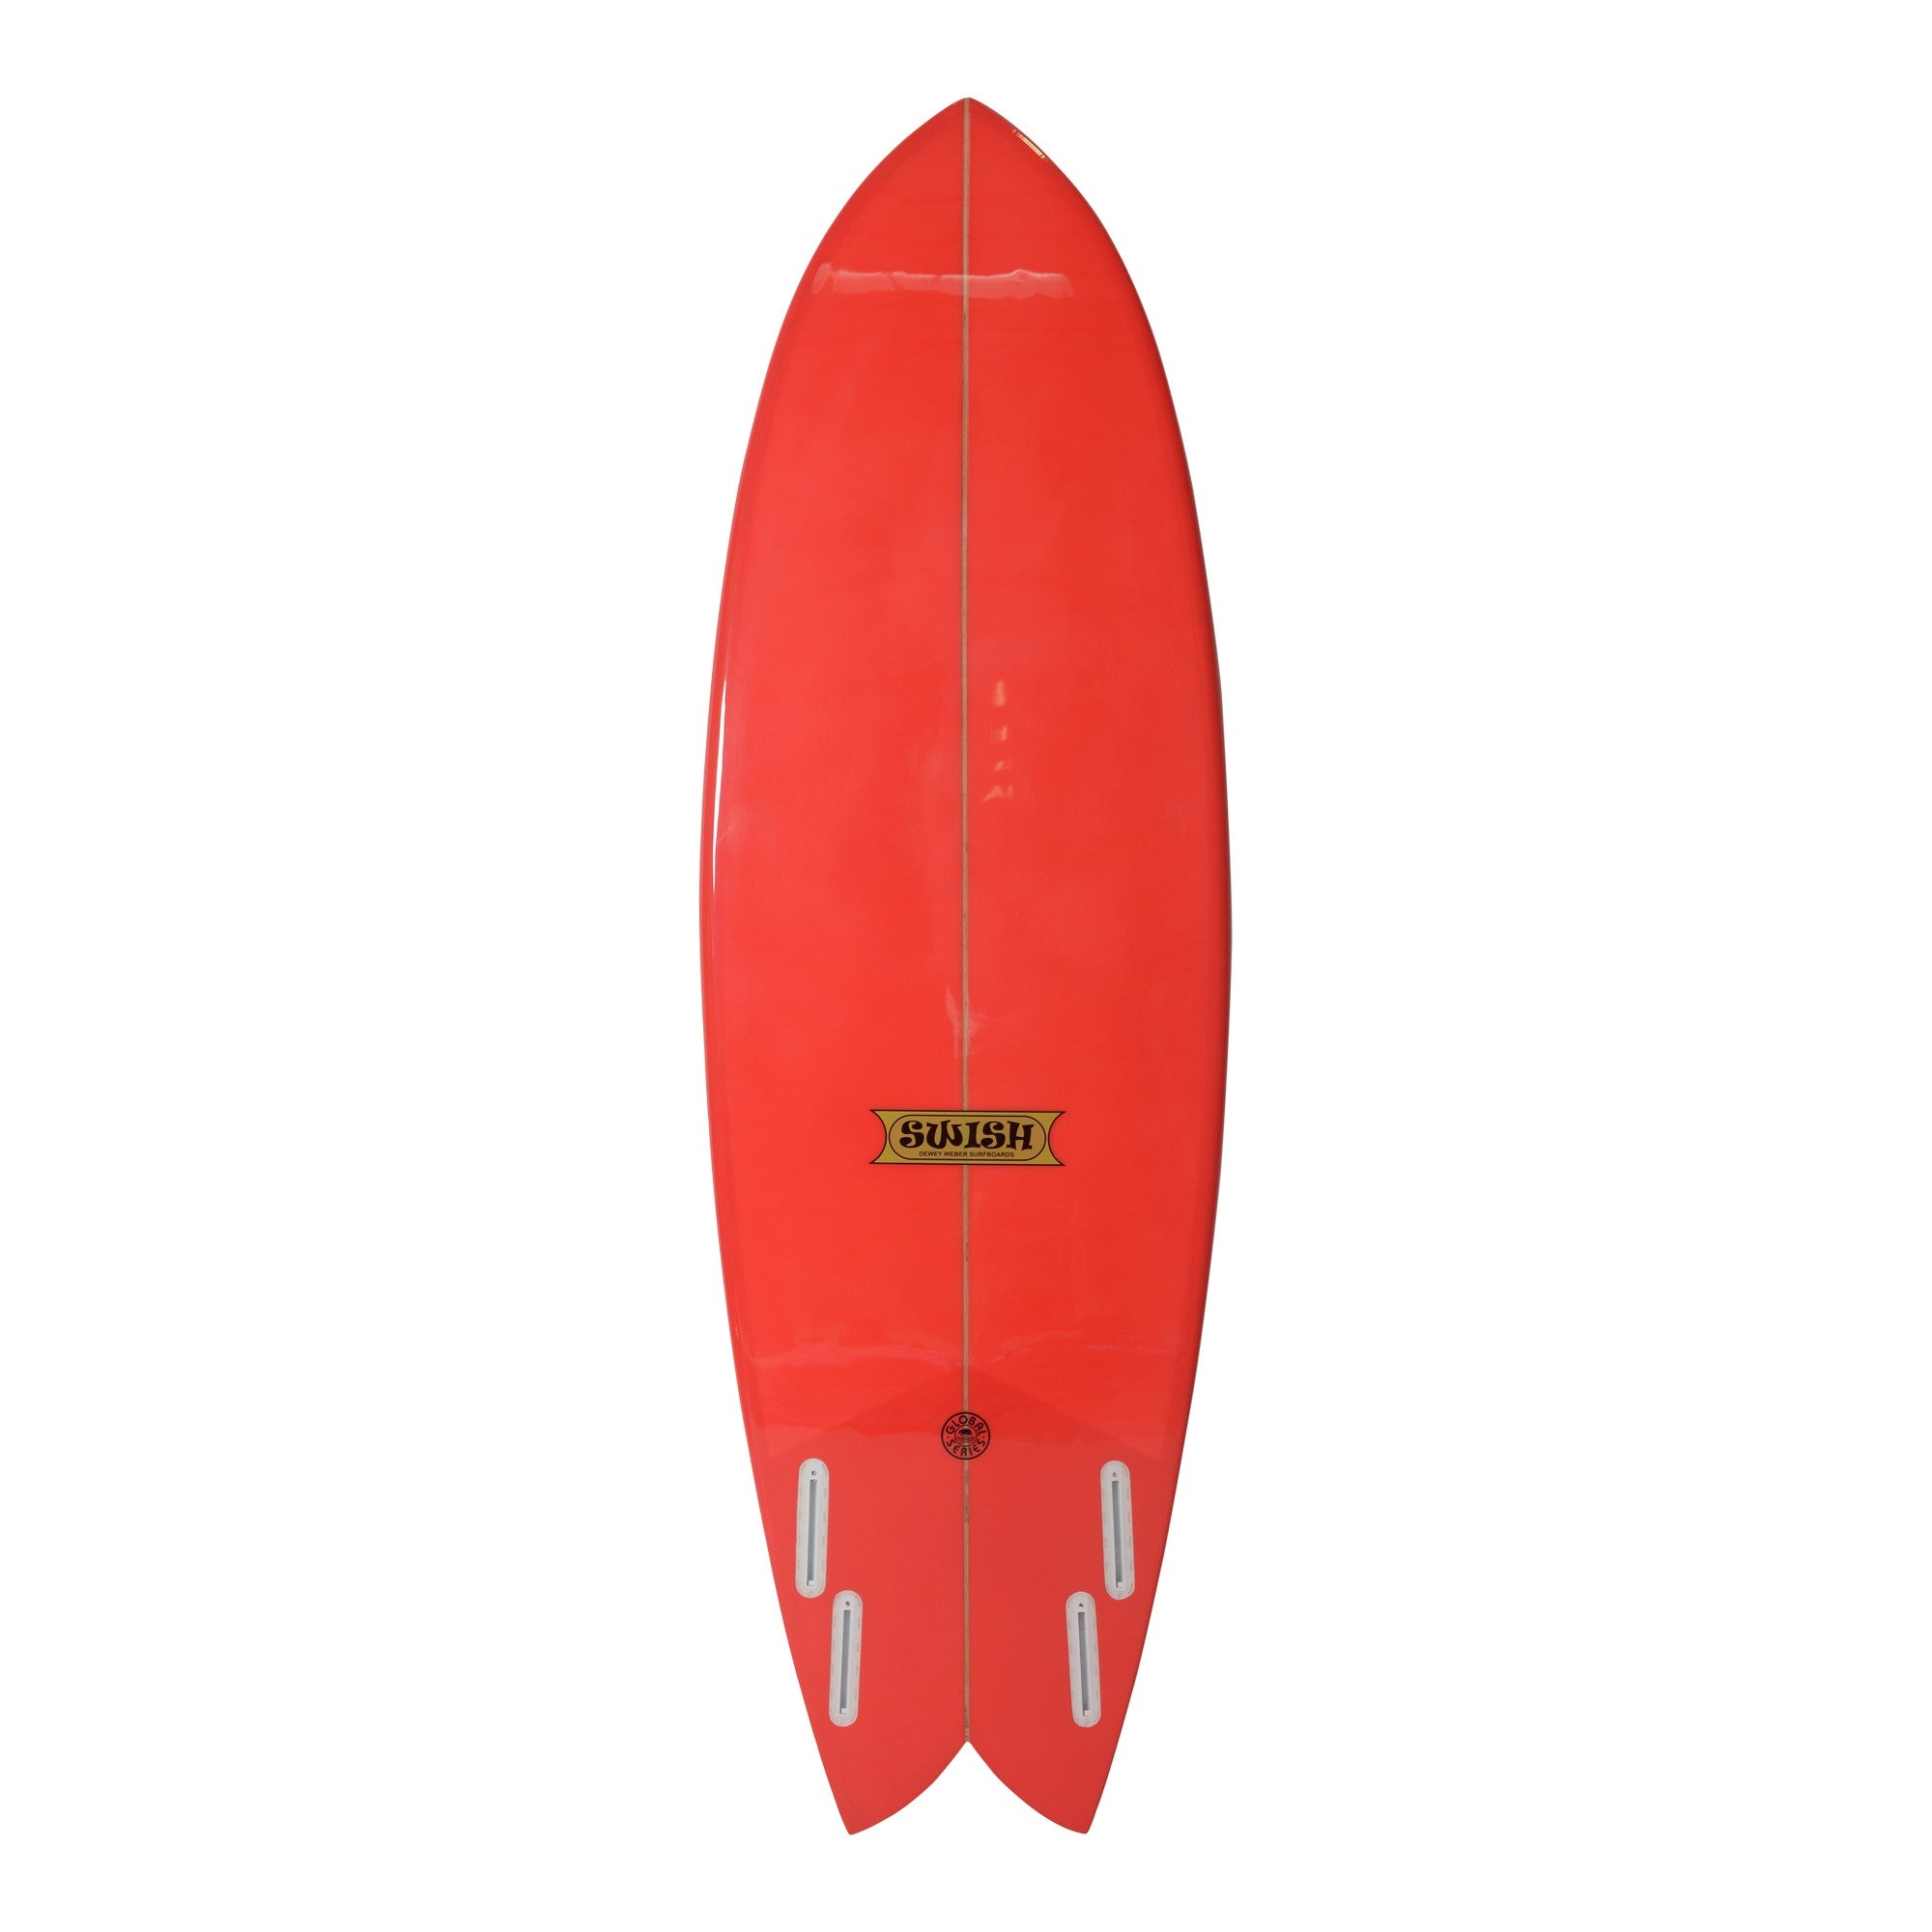 WEBER SURFBOARDS - Swish 6'0 - Red